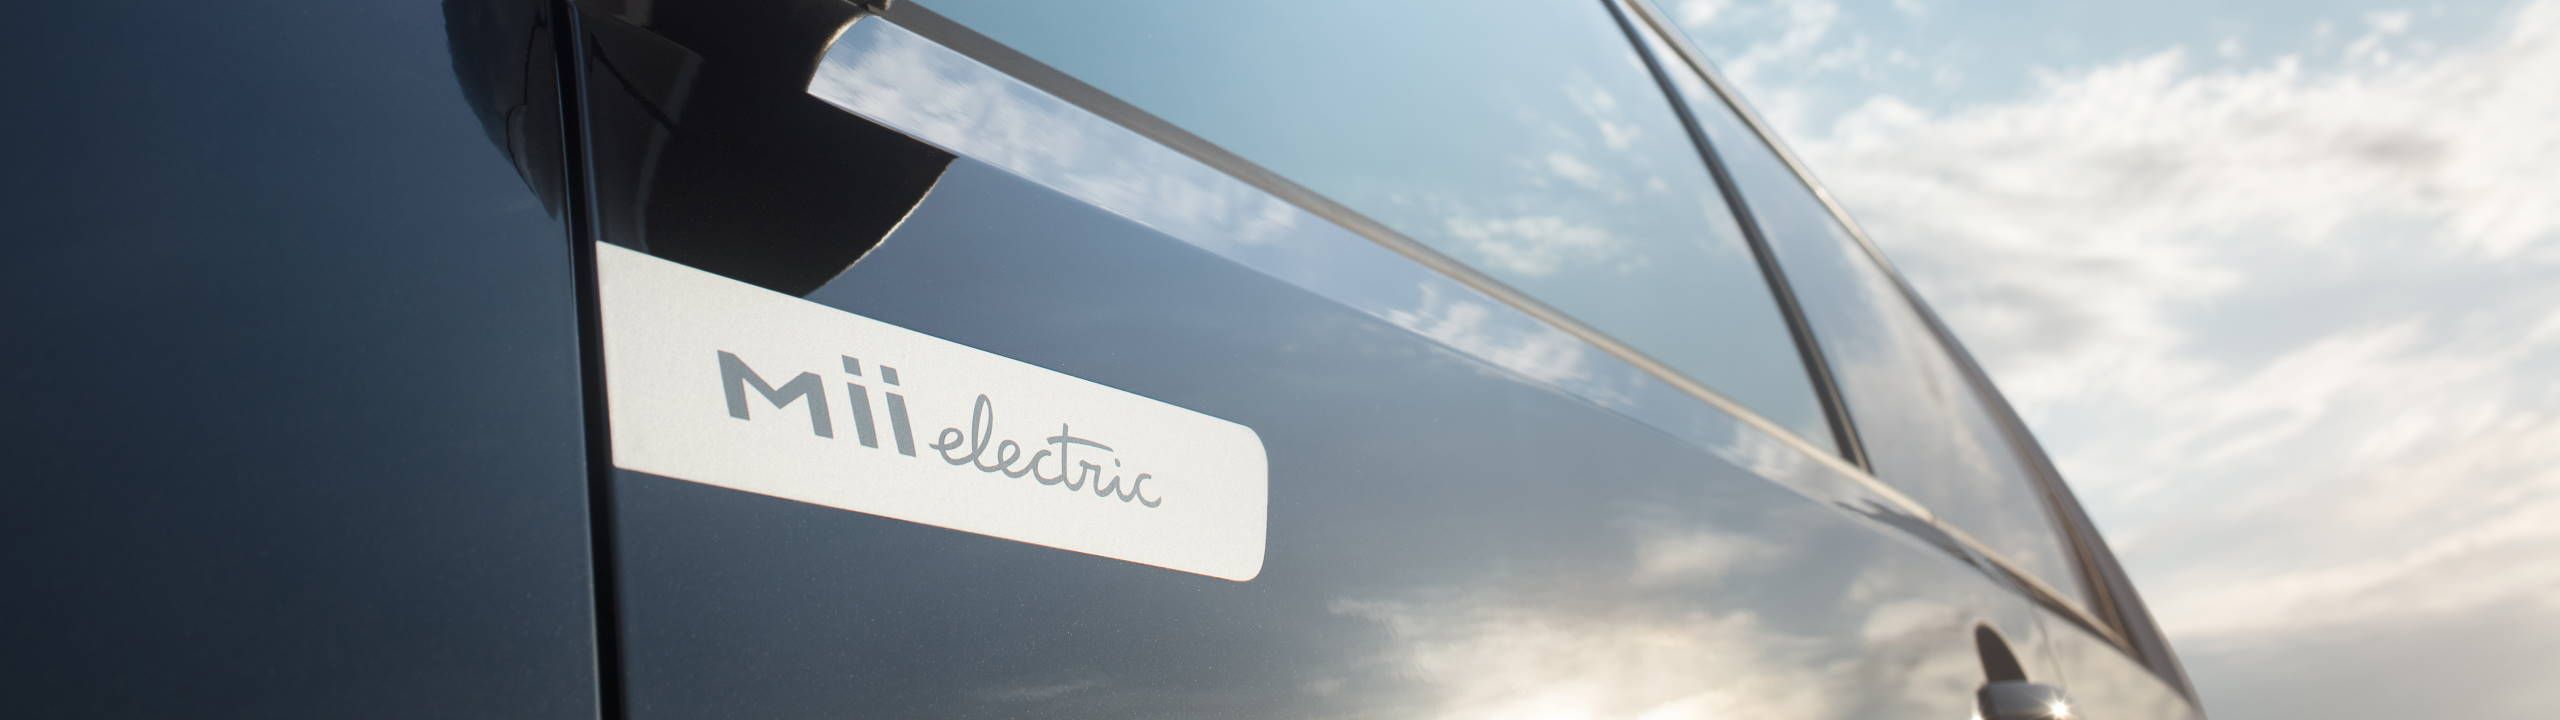 Das SEAT Mii electric Logo an einem schwarzen SEAT Mii